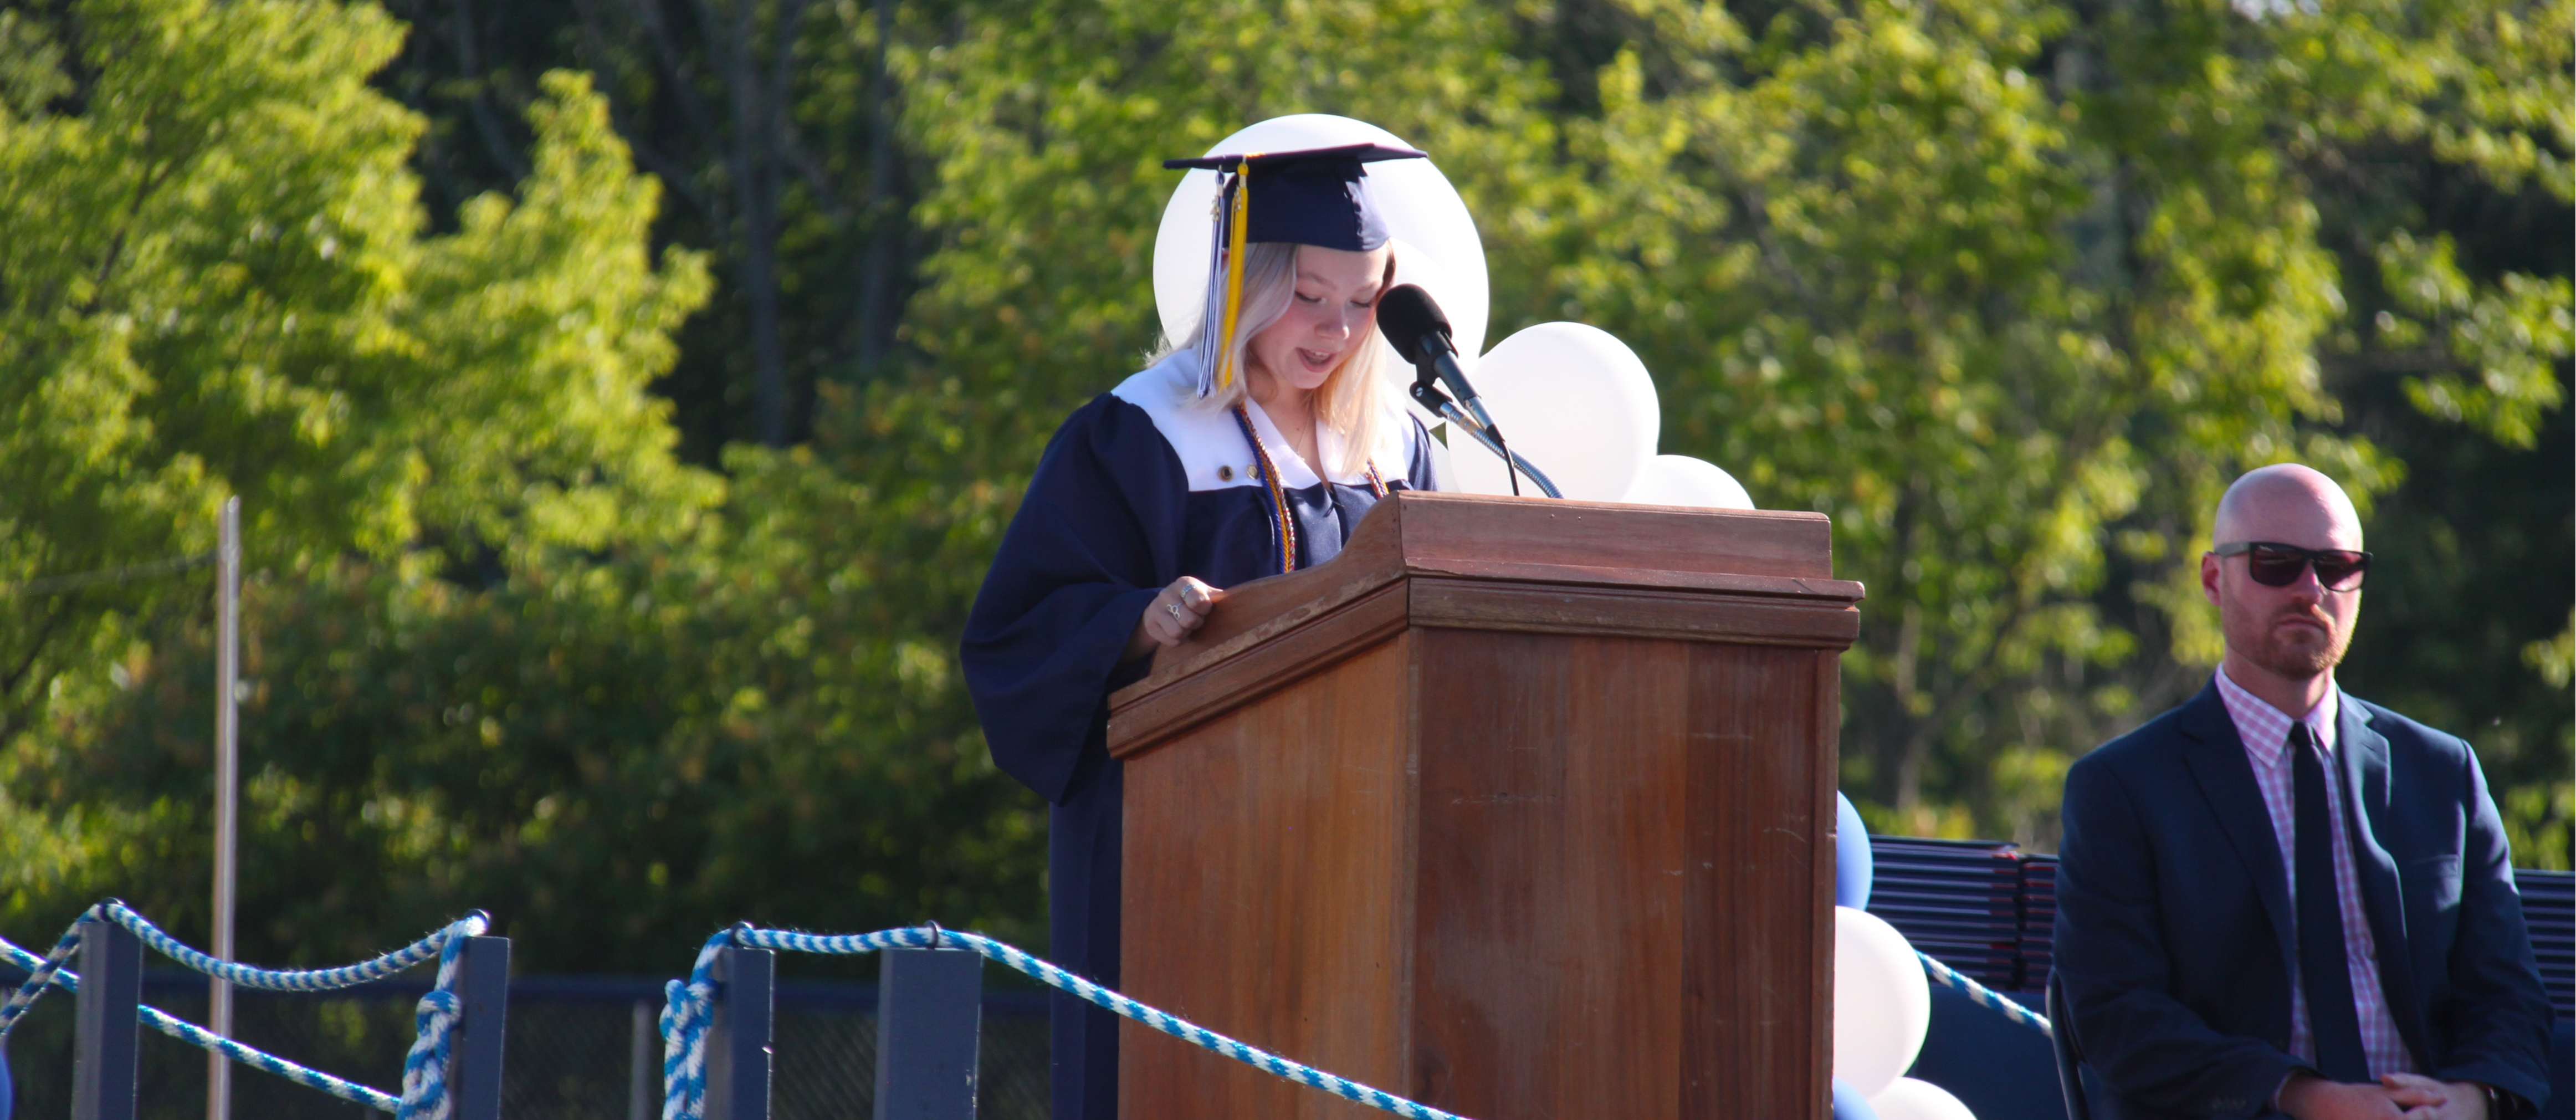 Student speaks at ceremony